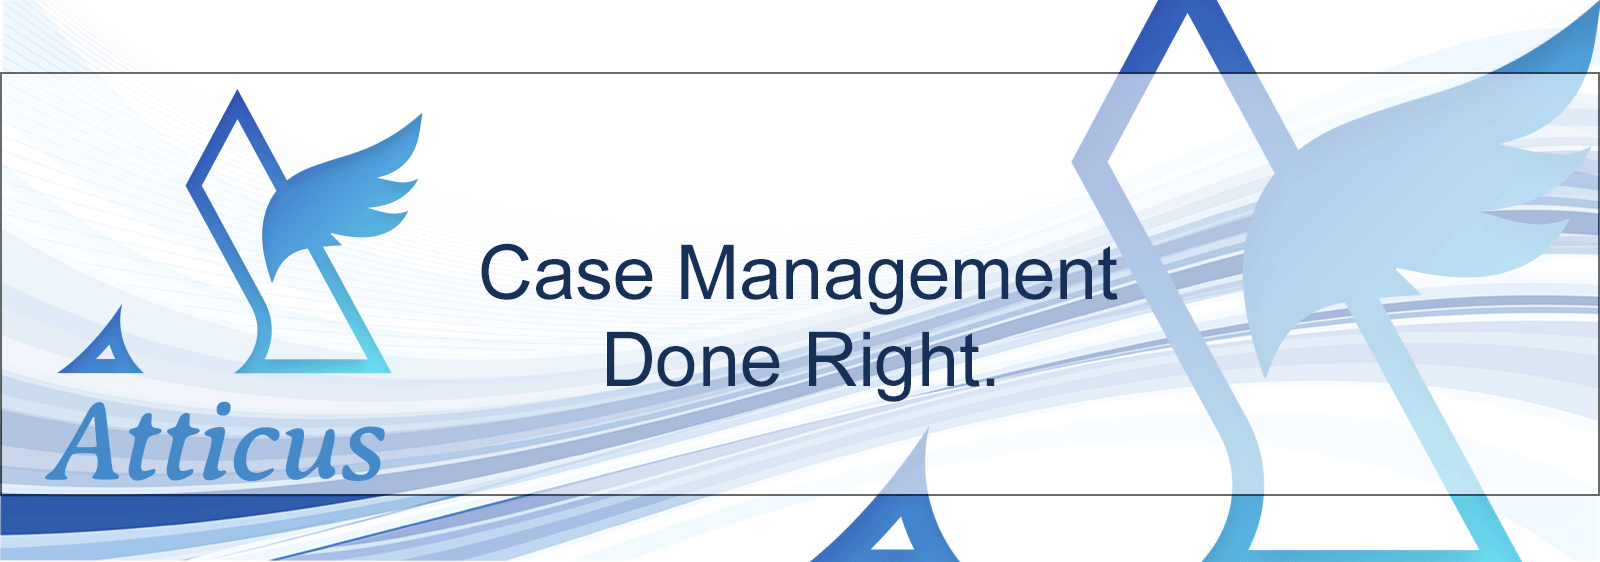 Atticus Case Management System - Case Management Done Right